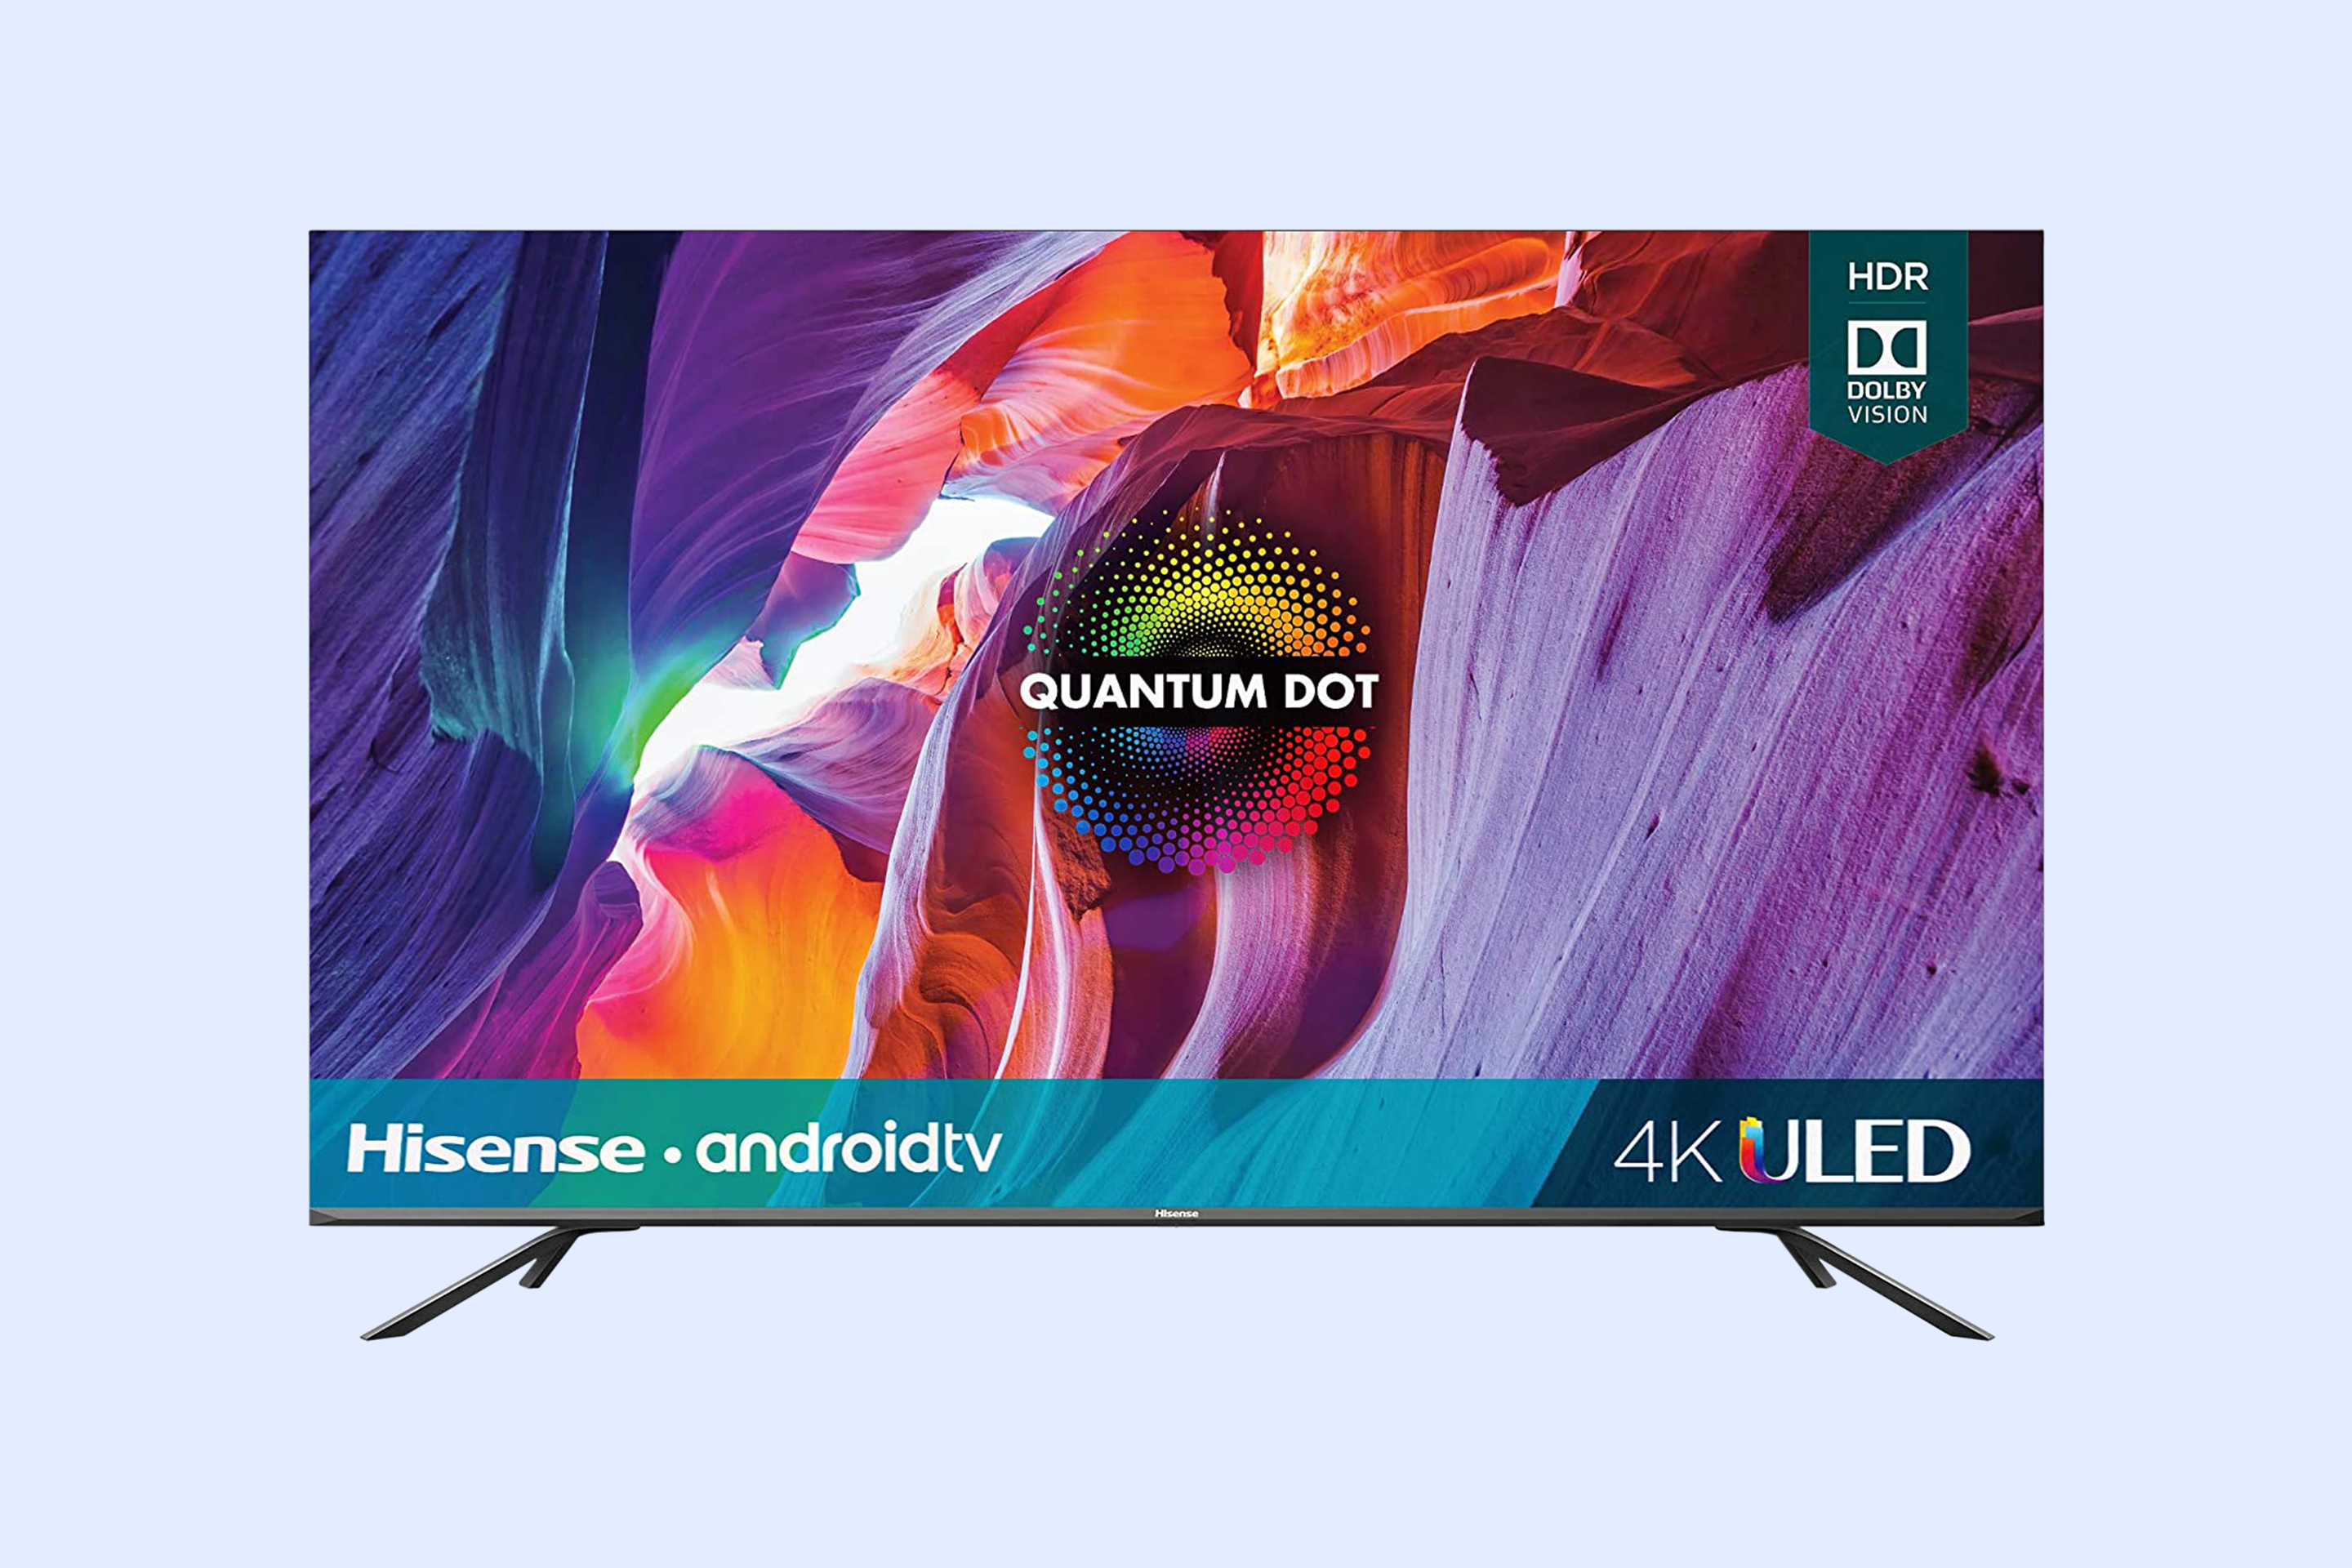 Hisense 4K ULED HDR Dolby Vision Smart TV with Lavender Background